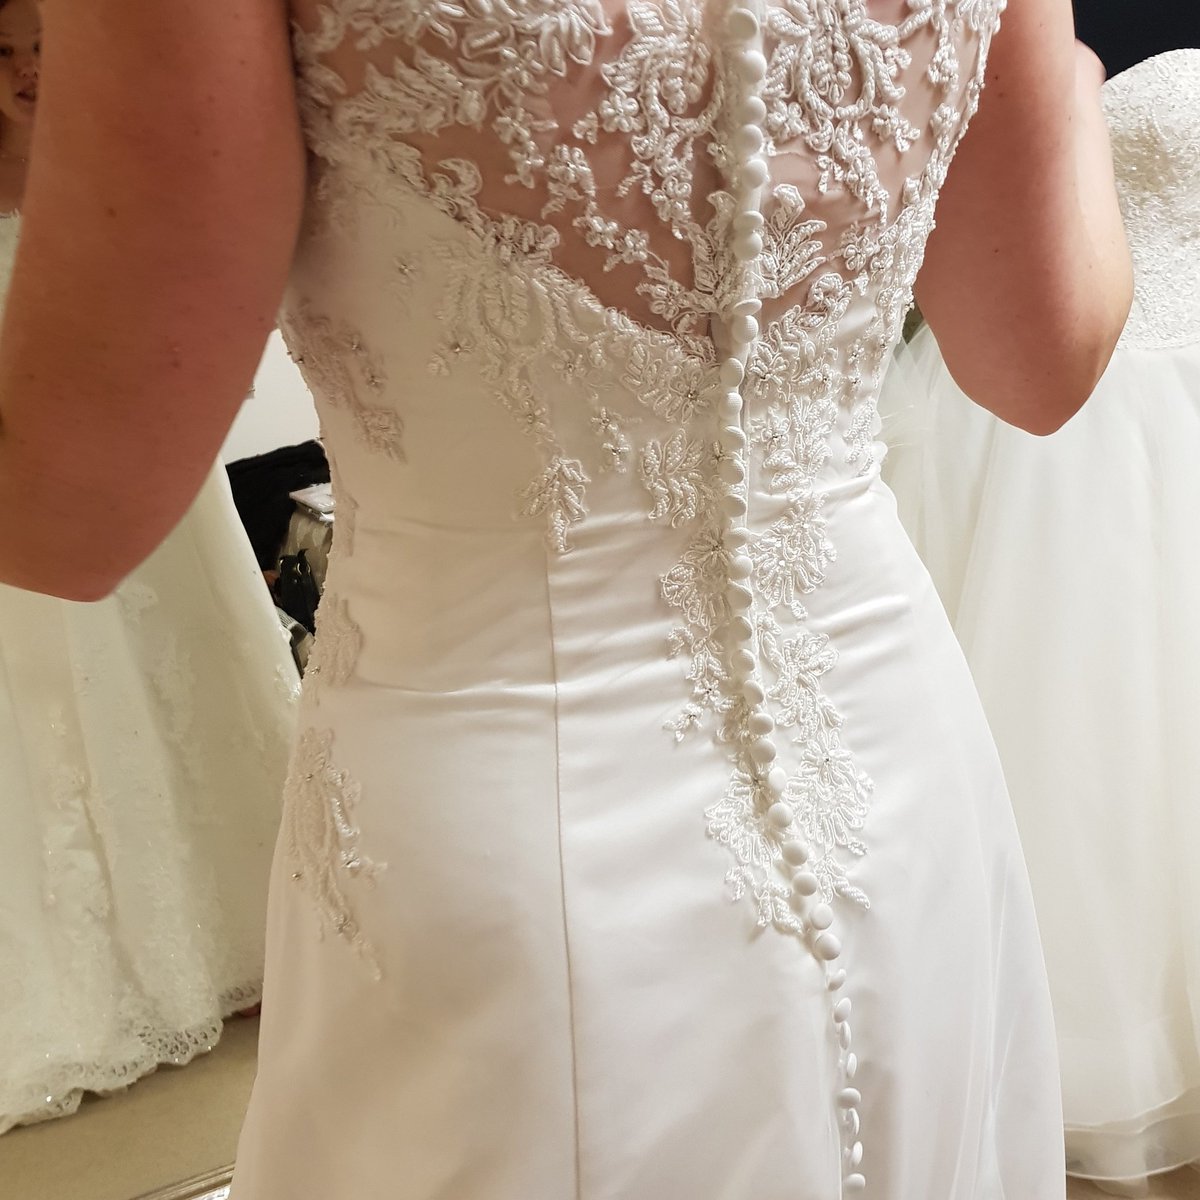 Beautiful bridal back curvaceousbridal.co.uk #lace #plussizebridal #curvybrides #chiffon #catherineparry #coveredbuttons